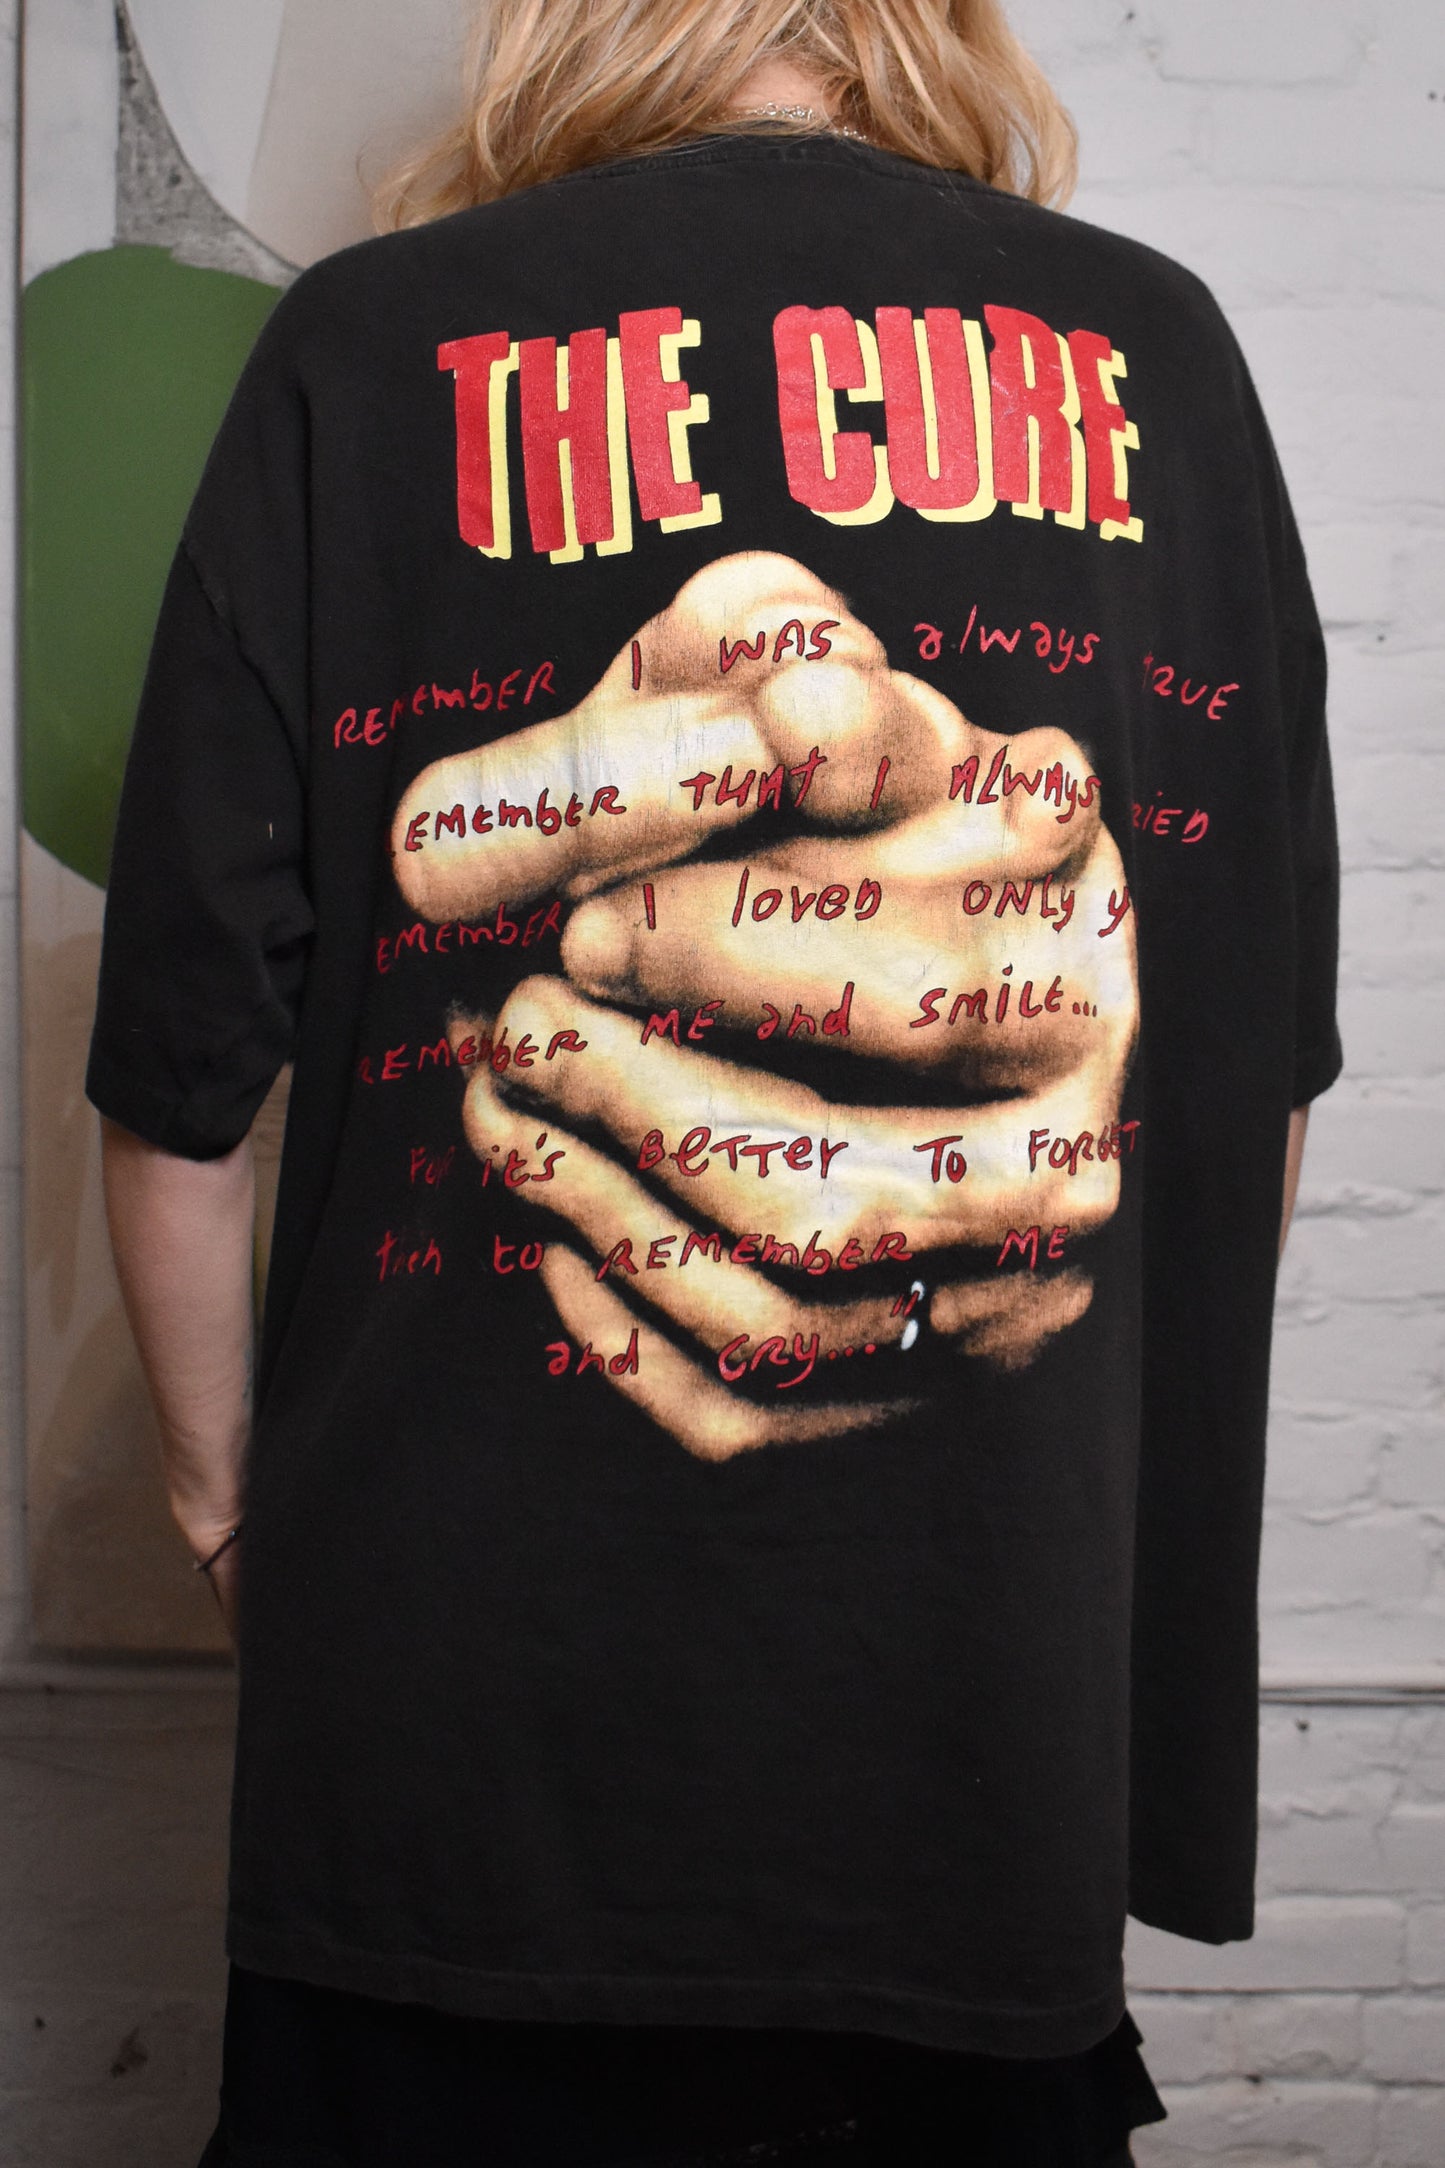 Vintage 1990s "The Cure" T-shirt